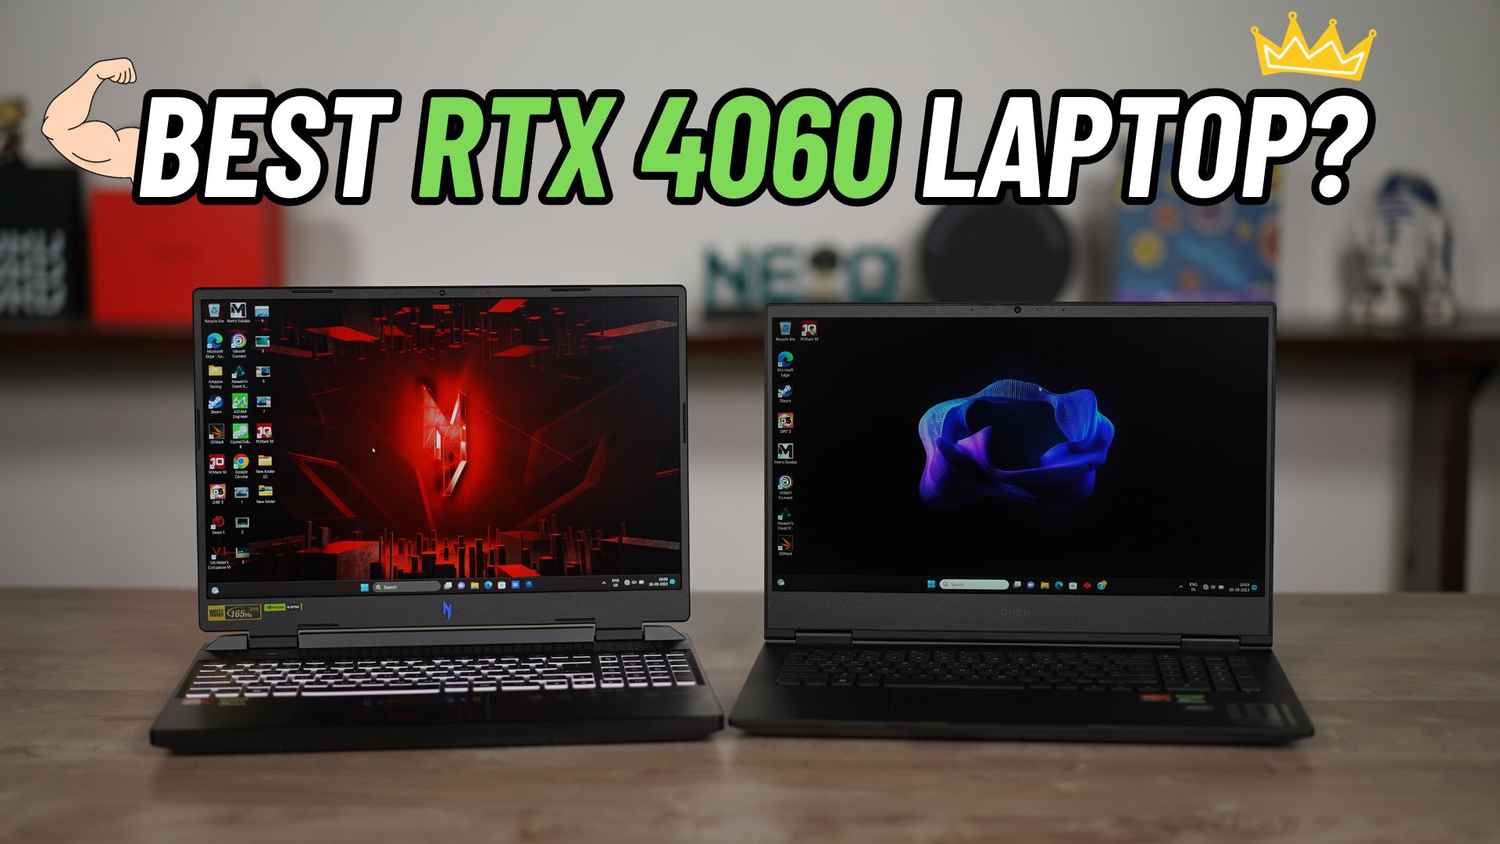 RTX 4060 Laptop vs RTX 3060 Laptop - Test in 8 Games 